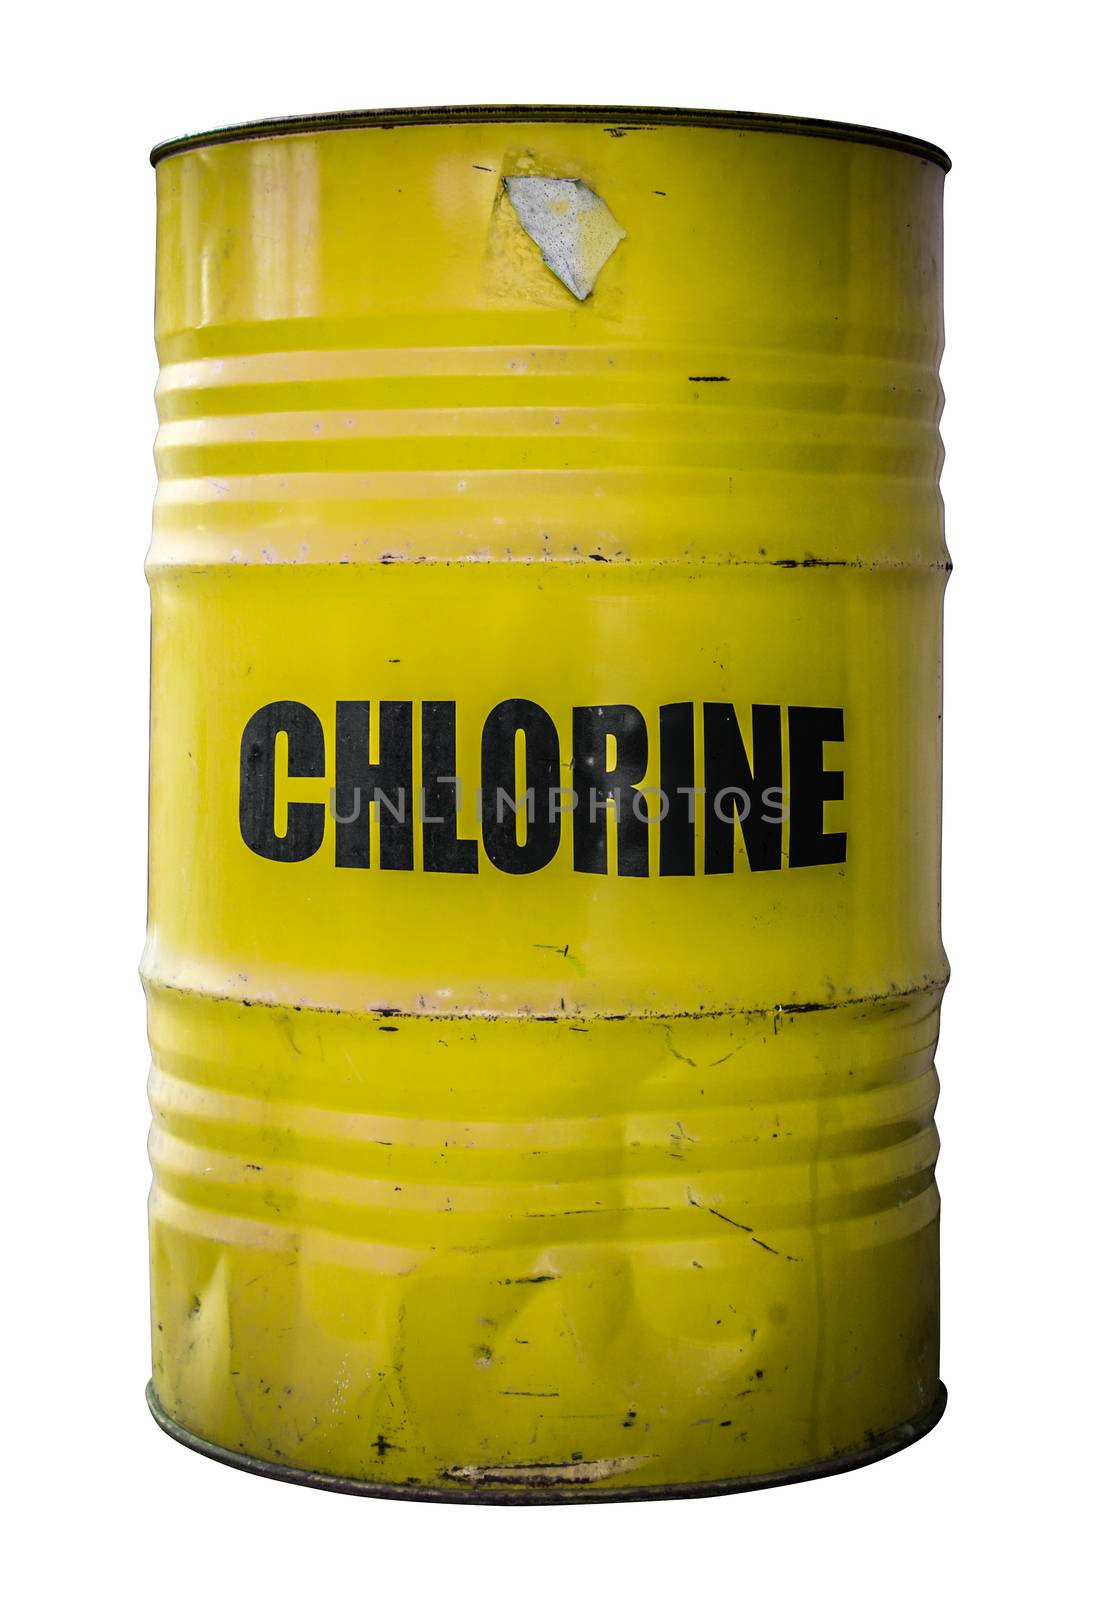 Yellow Barrel Of Chlorine by mrdoomits